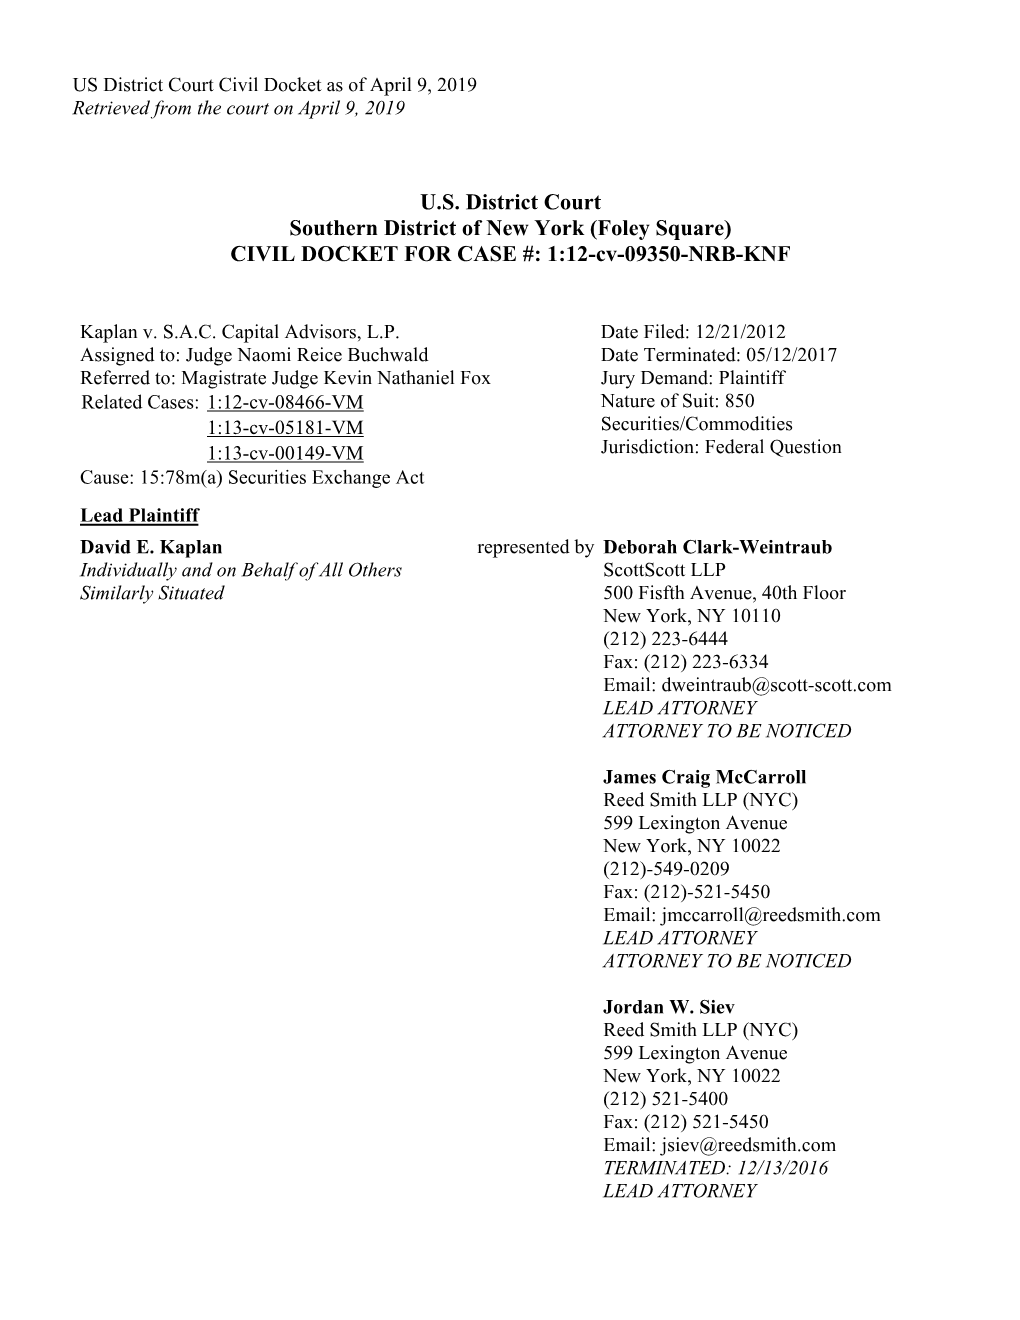 Kaplan V. S.A.C. Capital Advisors, L.P. 12-CV-09350-U.S. District Court